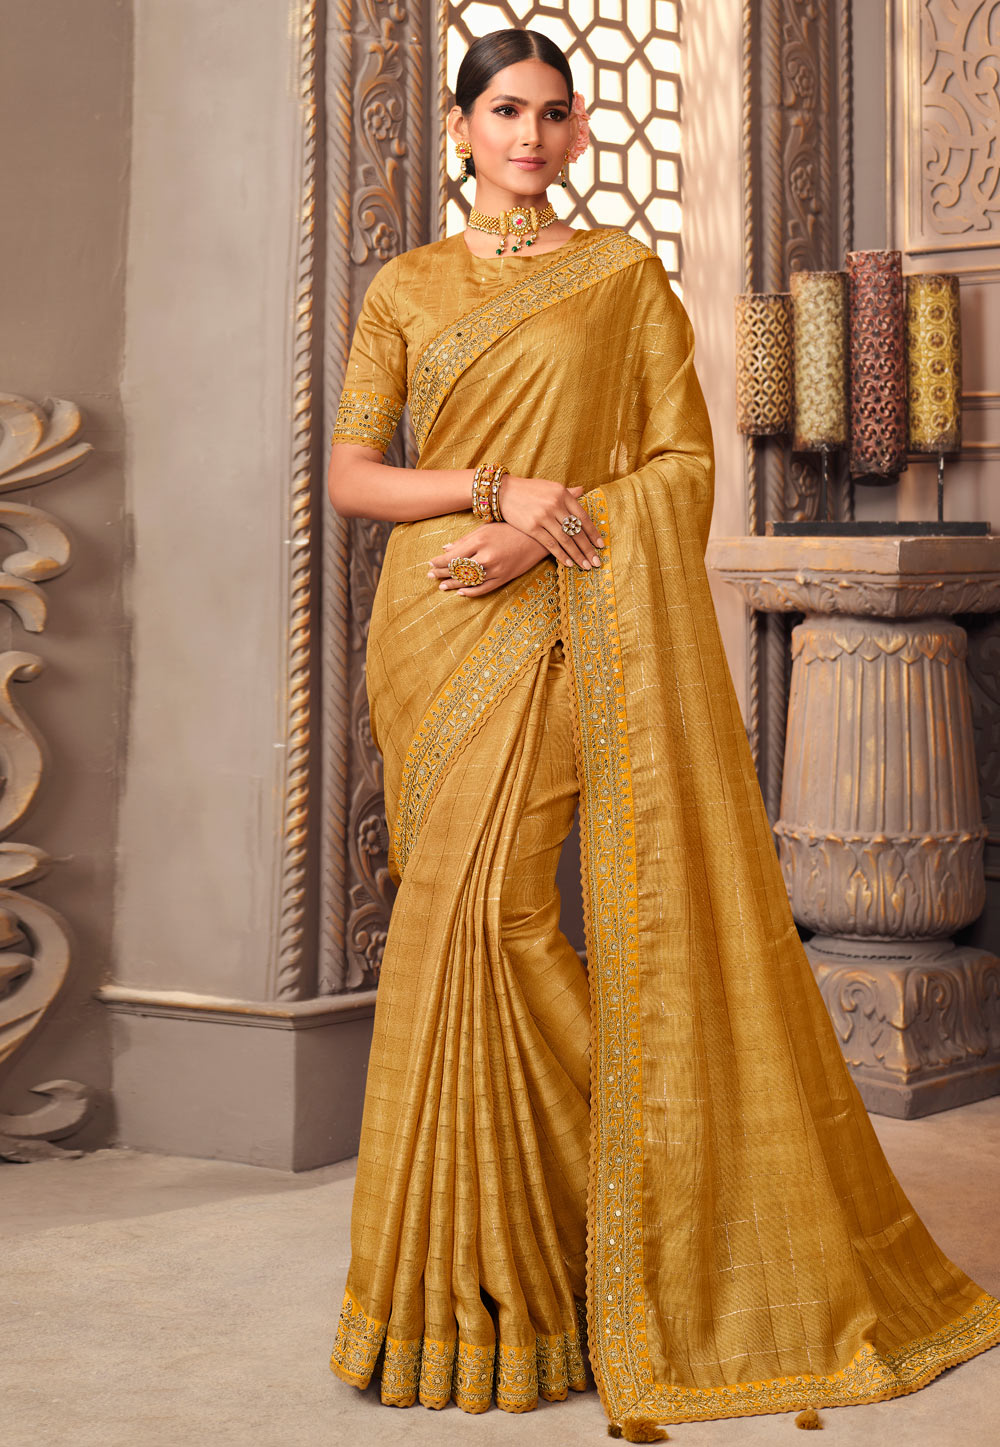 Top 999+ golden saree images – Amazing Collection golden saree images Full 4K